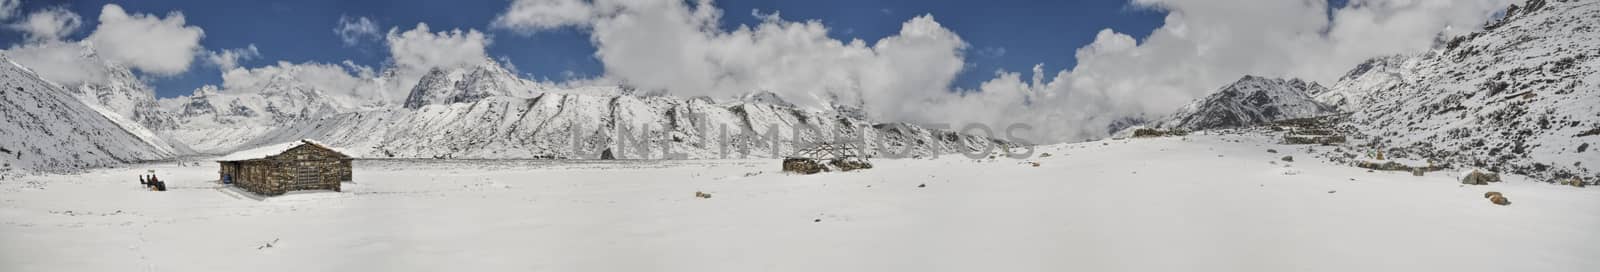 Scenic panorama of Himalayas near Kanchenjunga in Nepal with mountain cabins